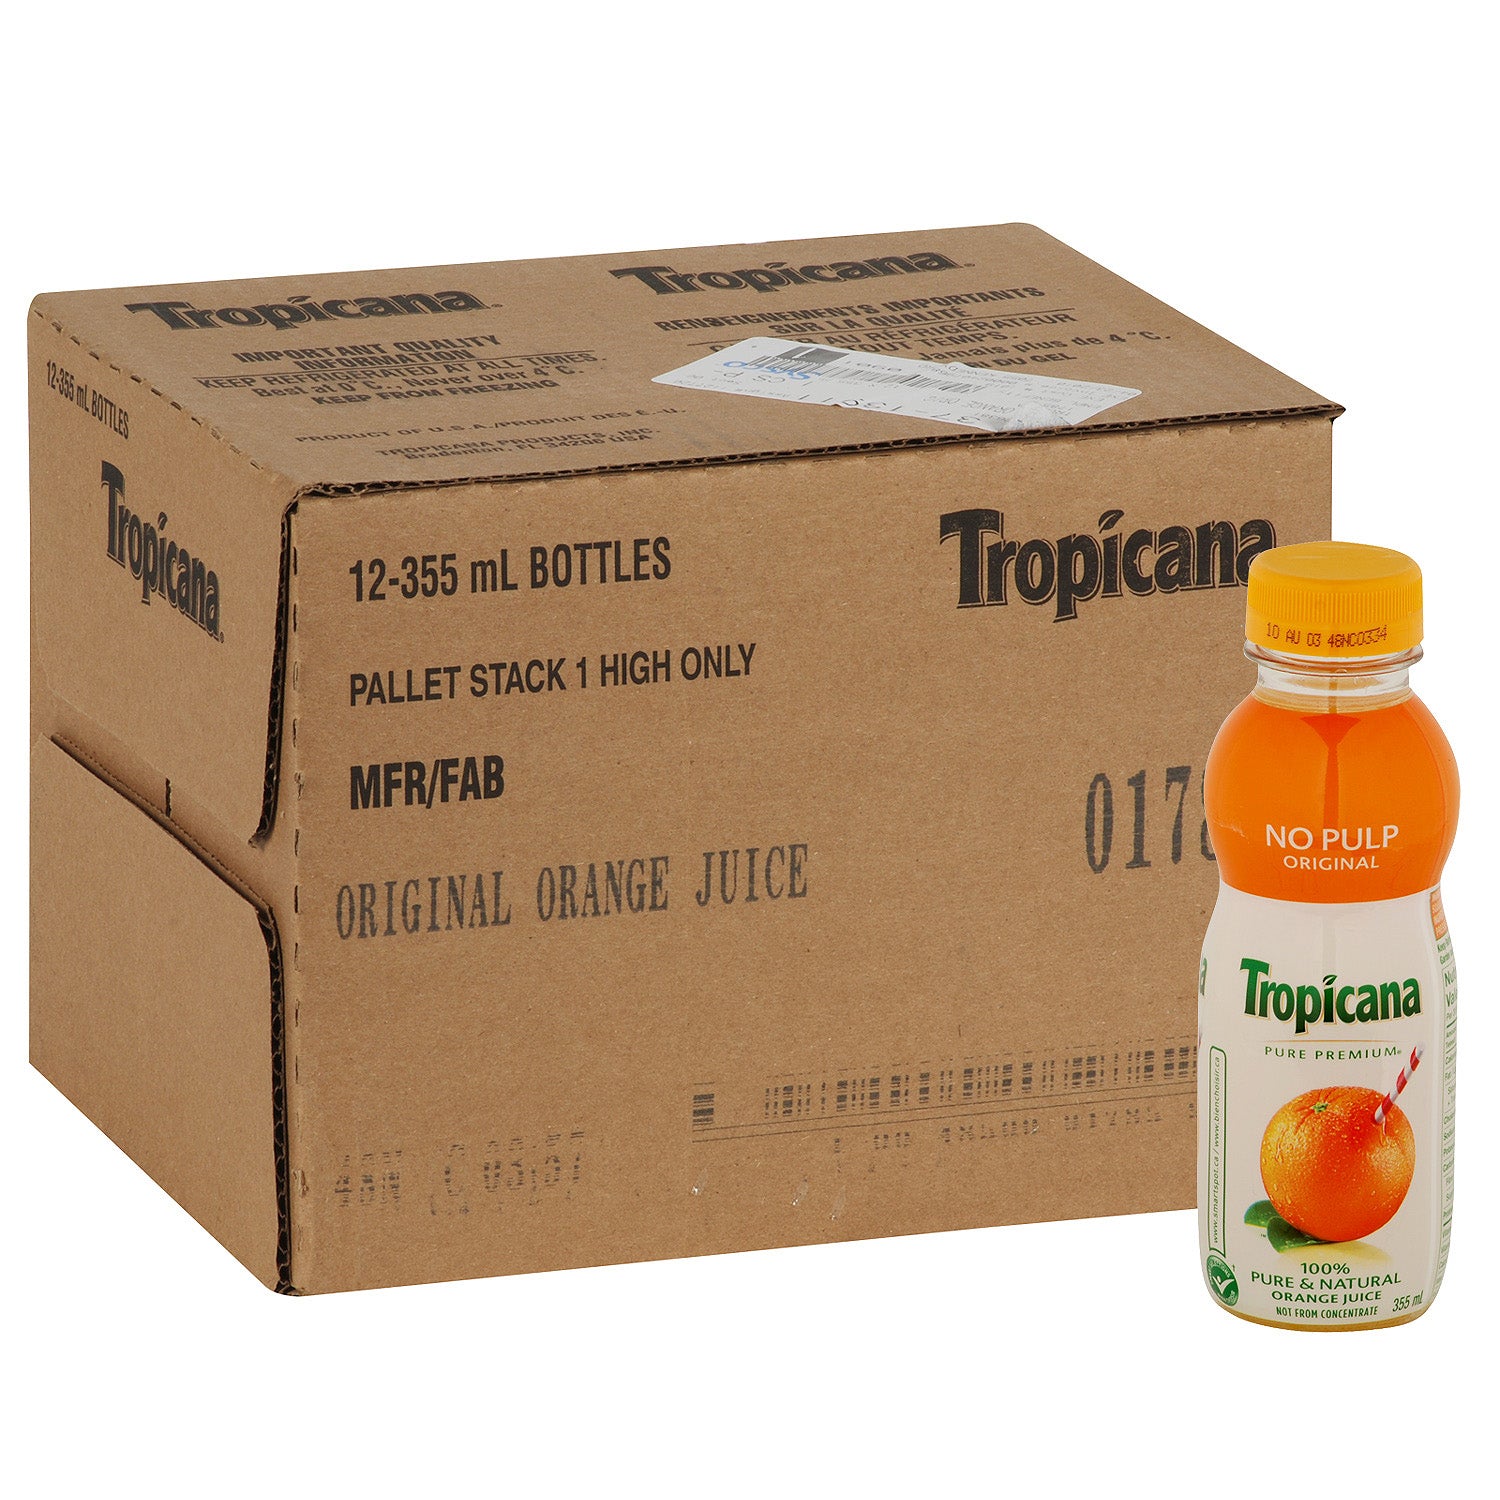 tropicana apple juice nutritional value